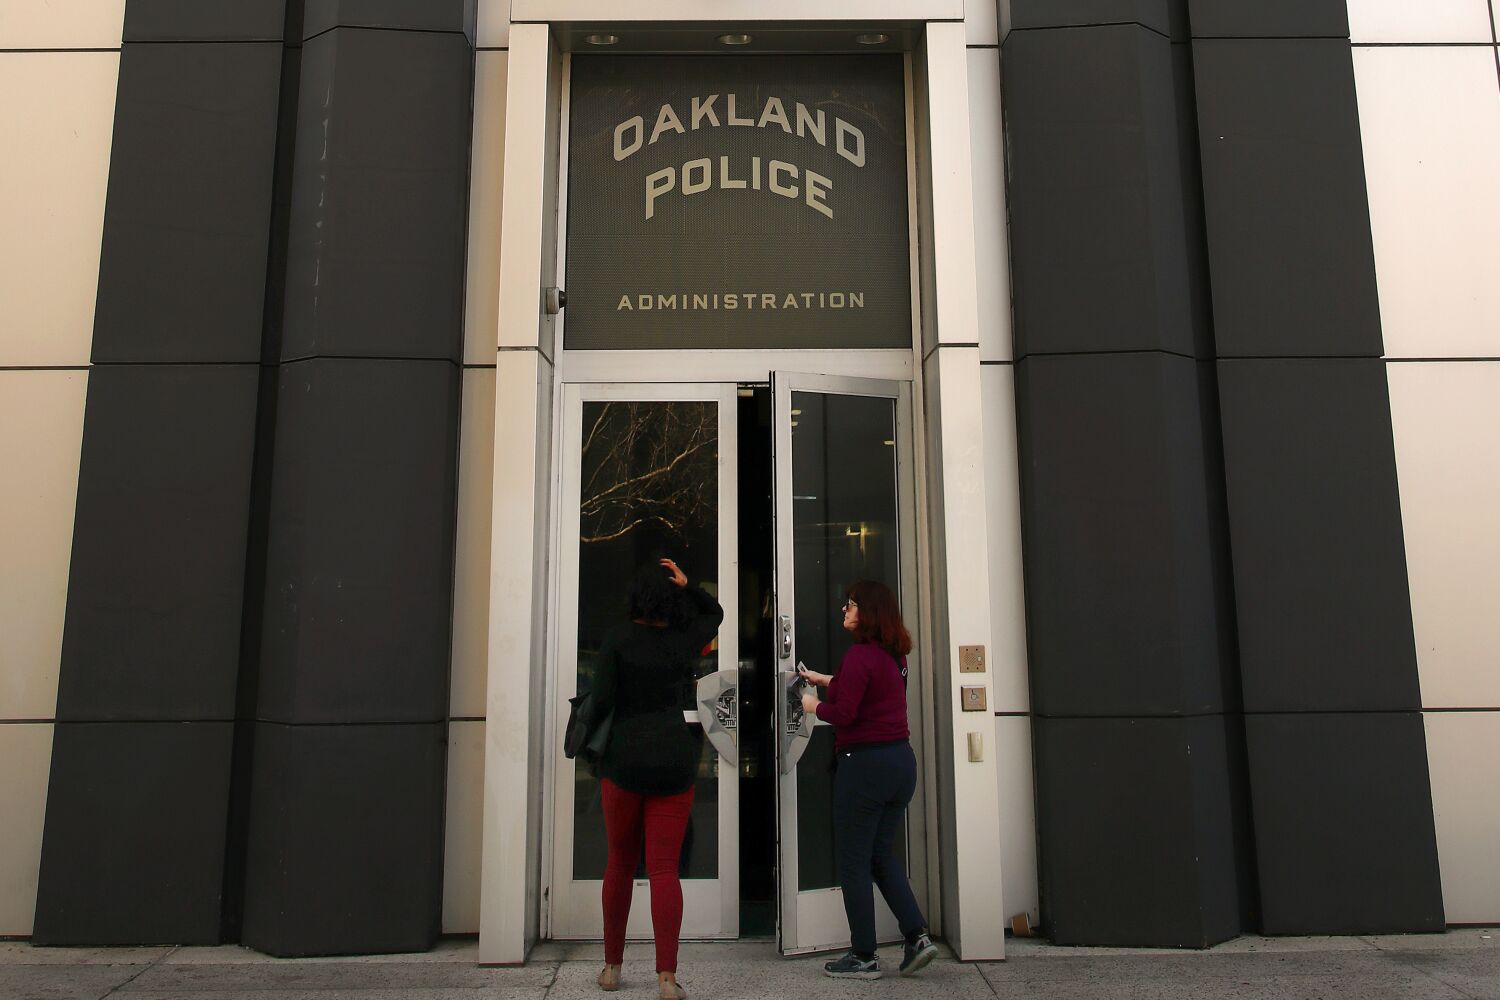 1 dead, 7 injured in Oakland shooting